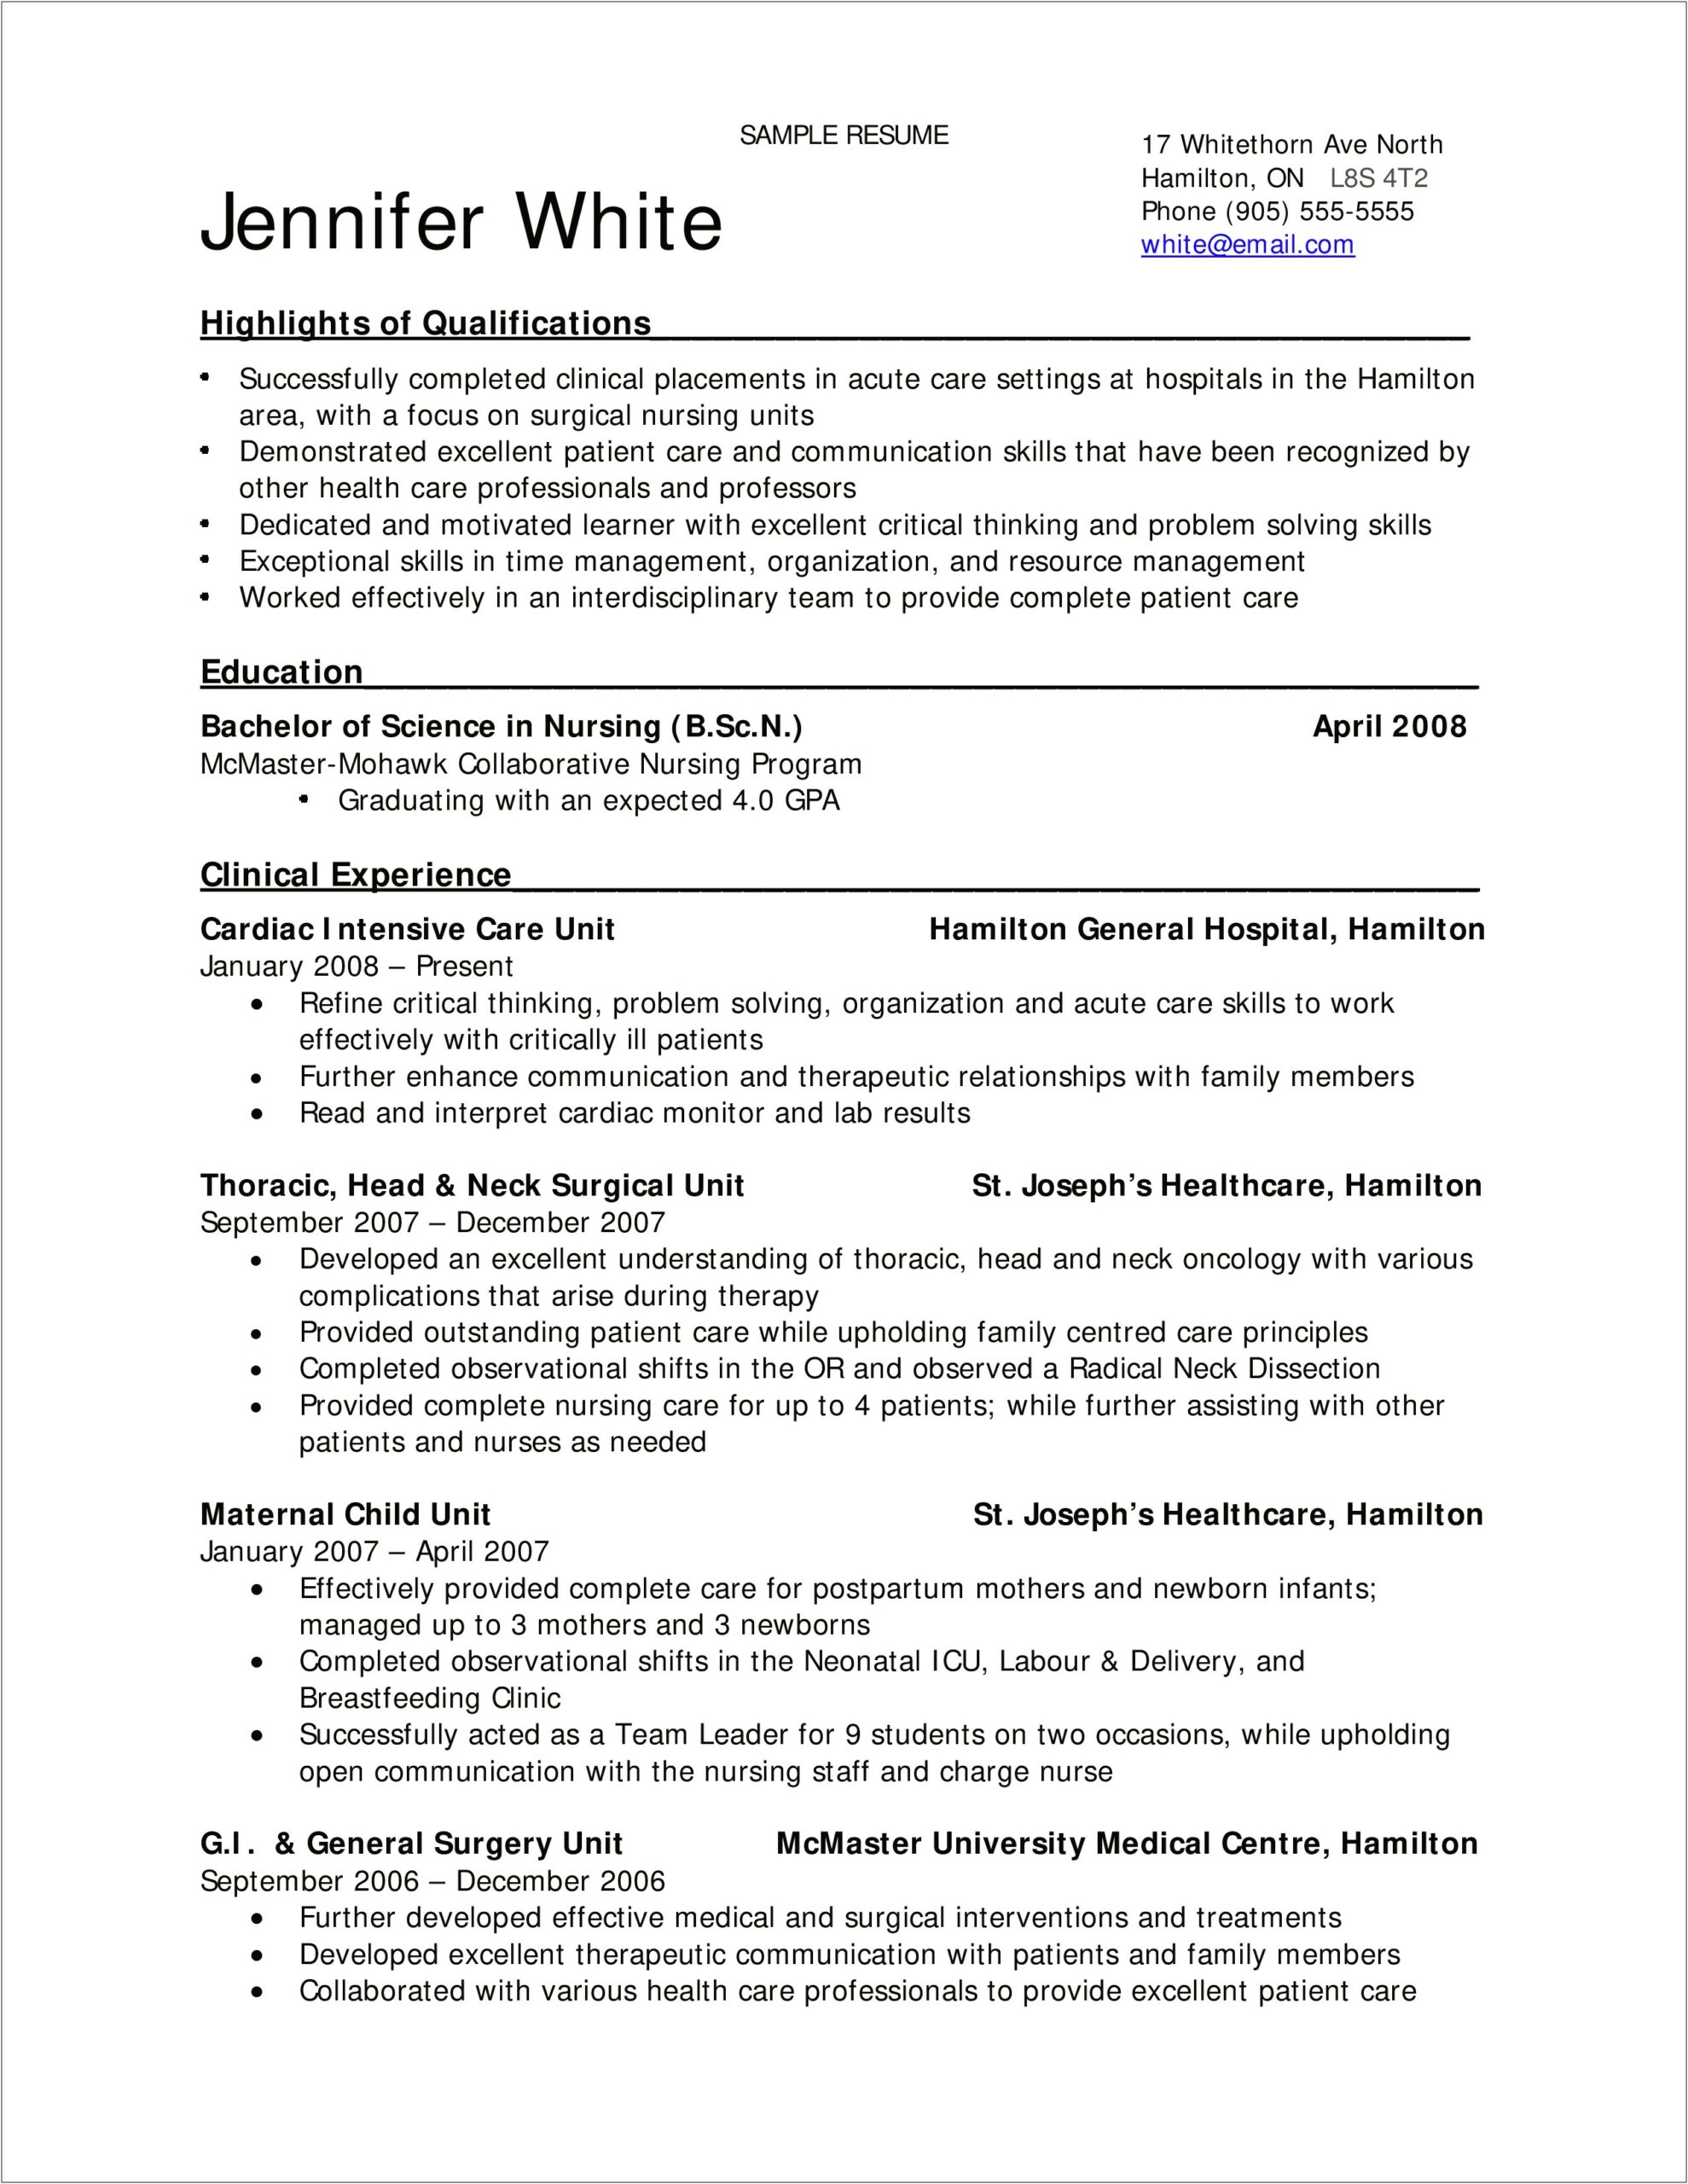 Sample Resume For Bsn Nurse Medical Surgical